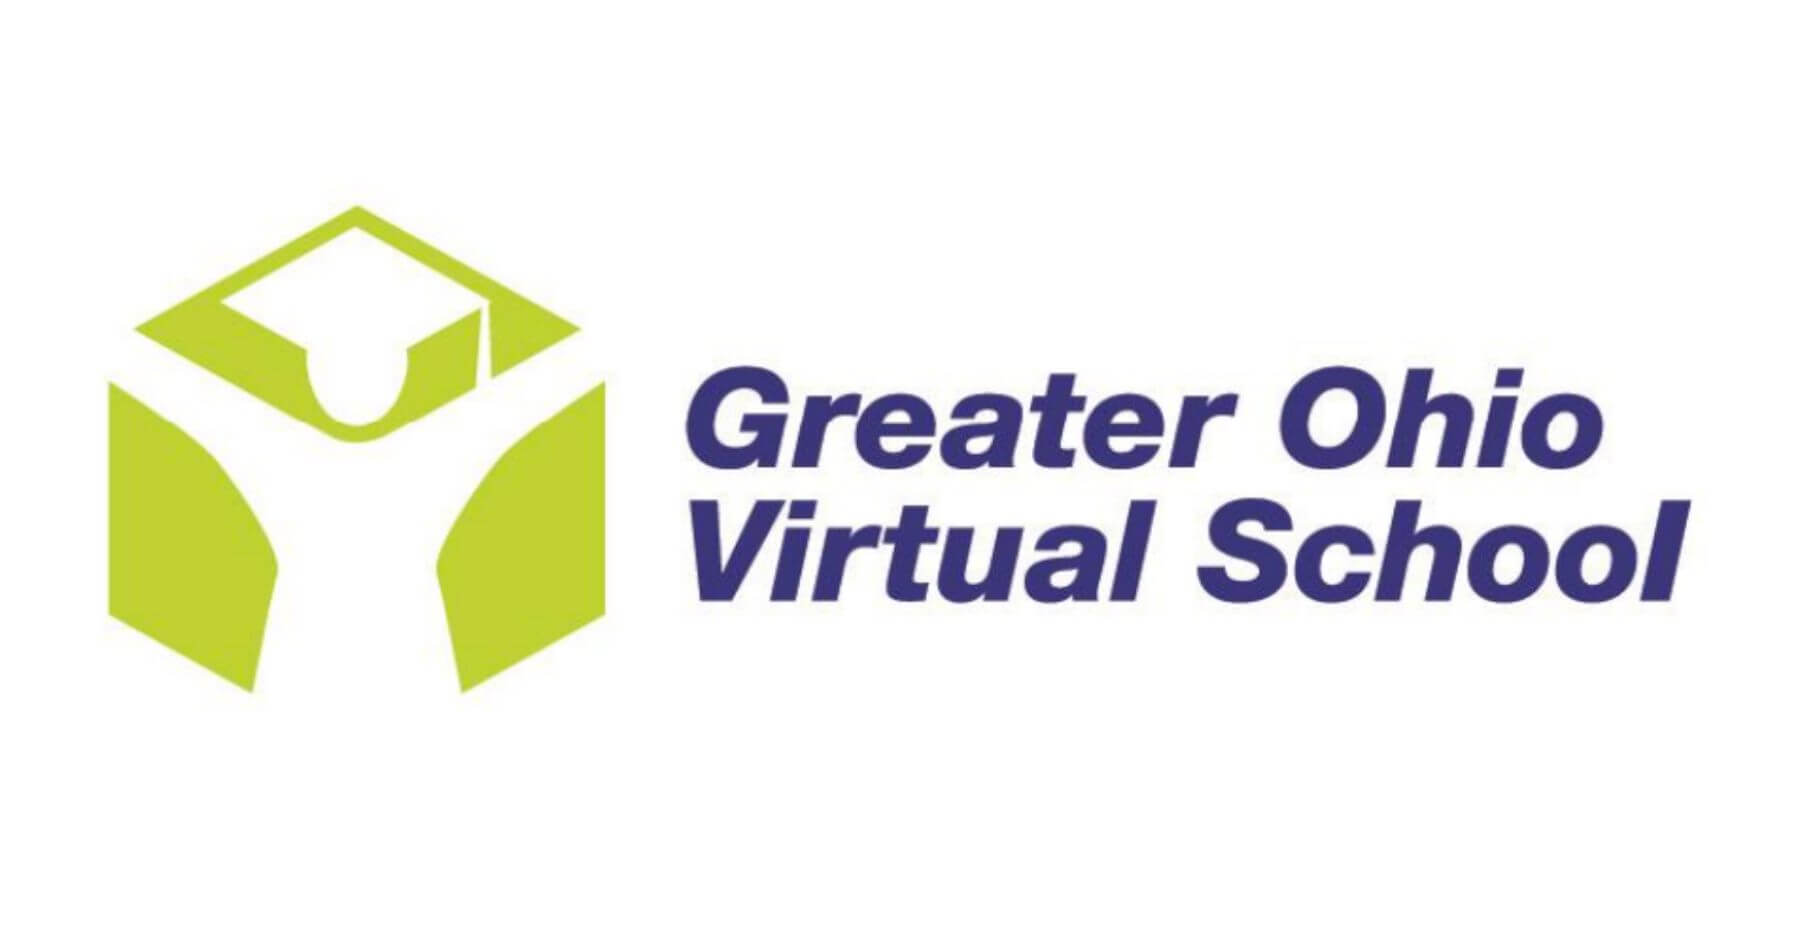 Greater Ohio Virtual School